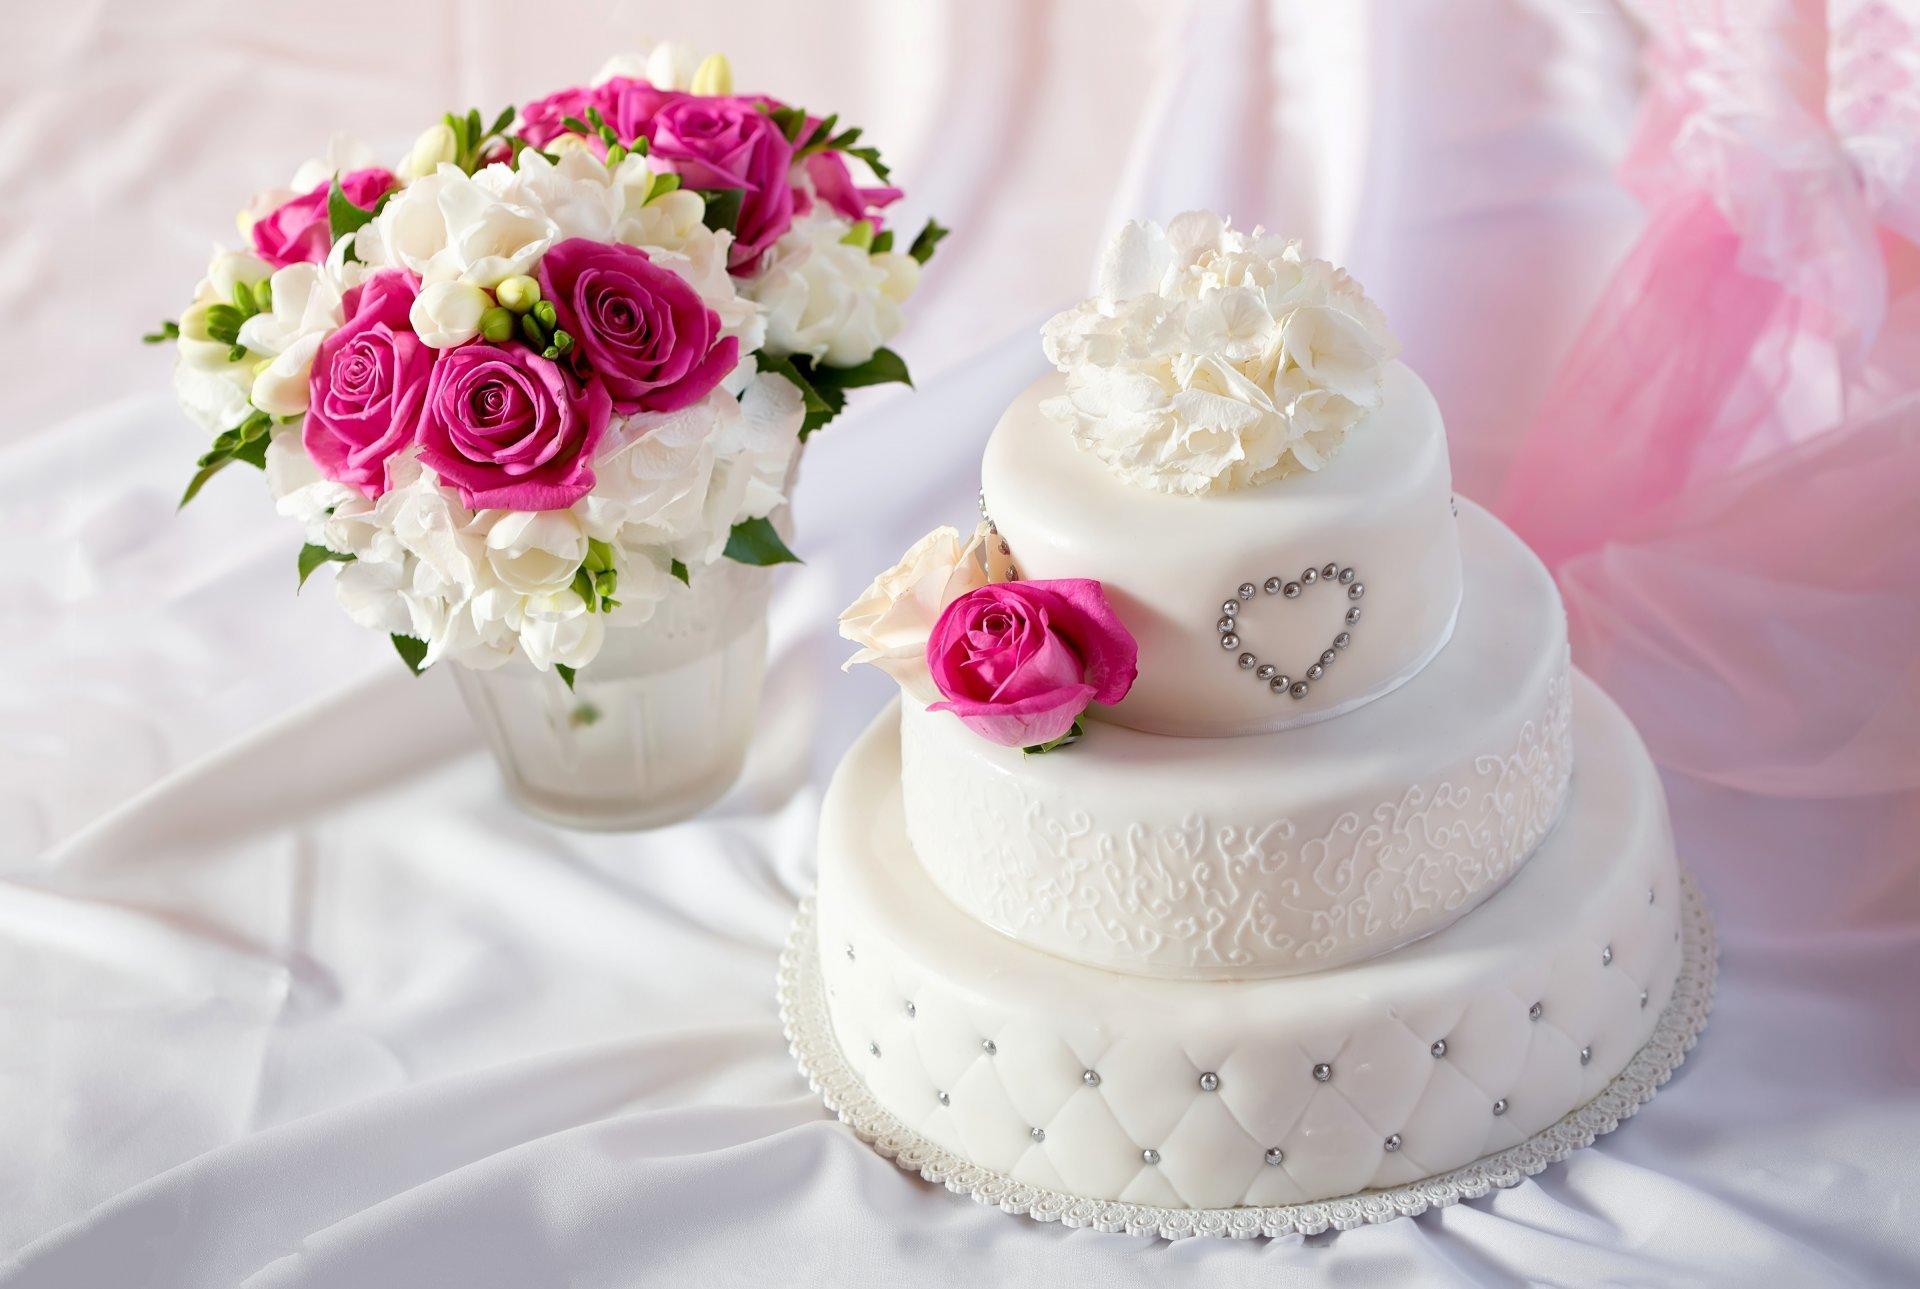 Beautiful Cake for Wedding Ceremony - Stock Image - Everypixel